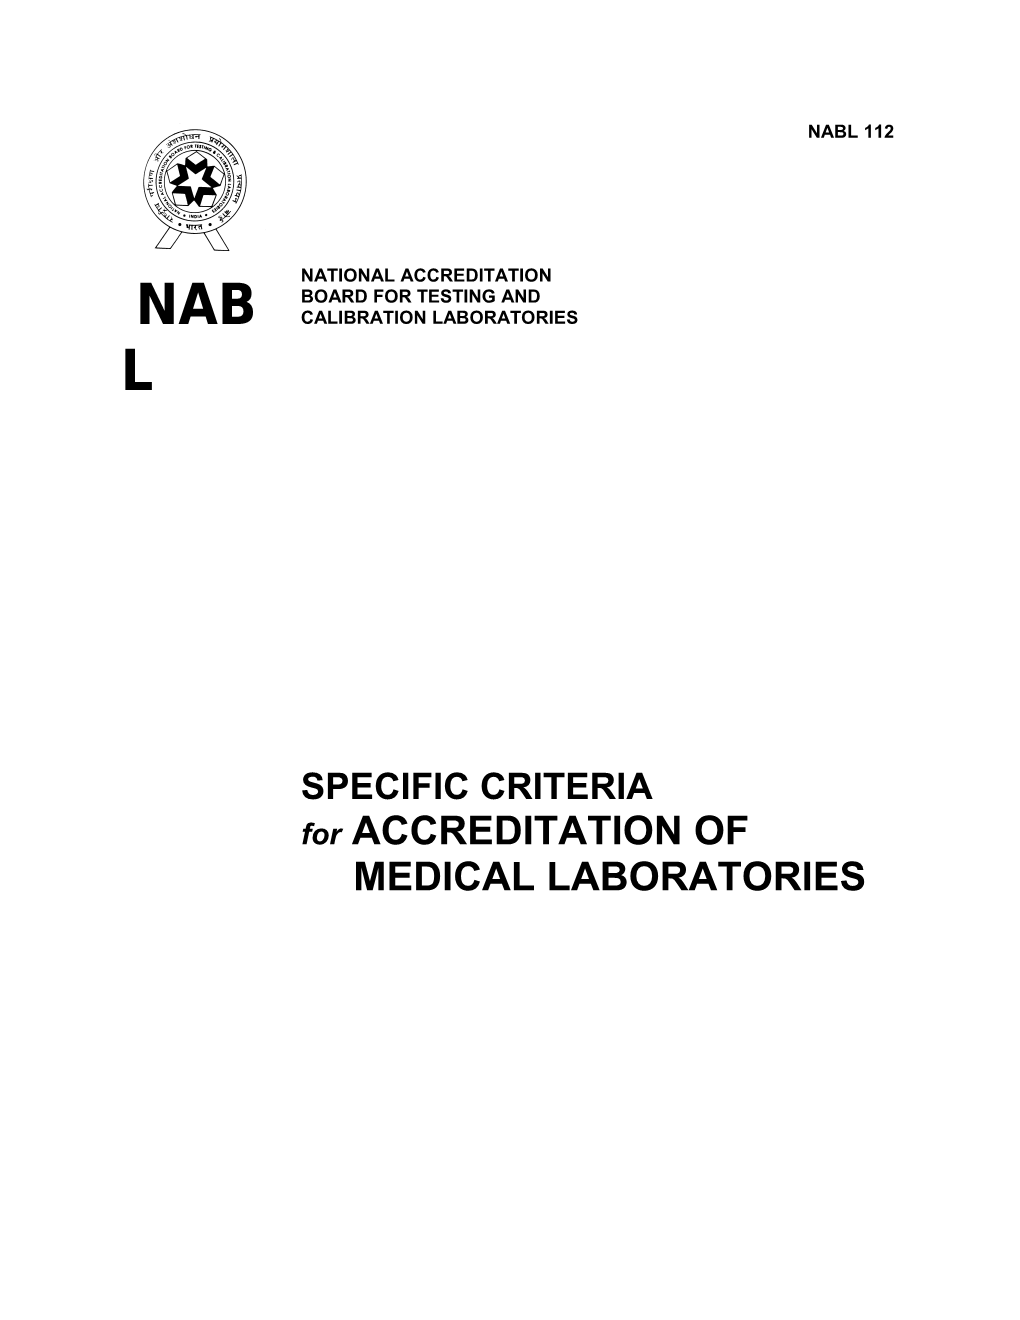 National Accreditation Board for Testing and Calibration Laboratories, New Delhi